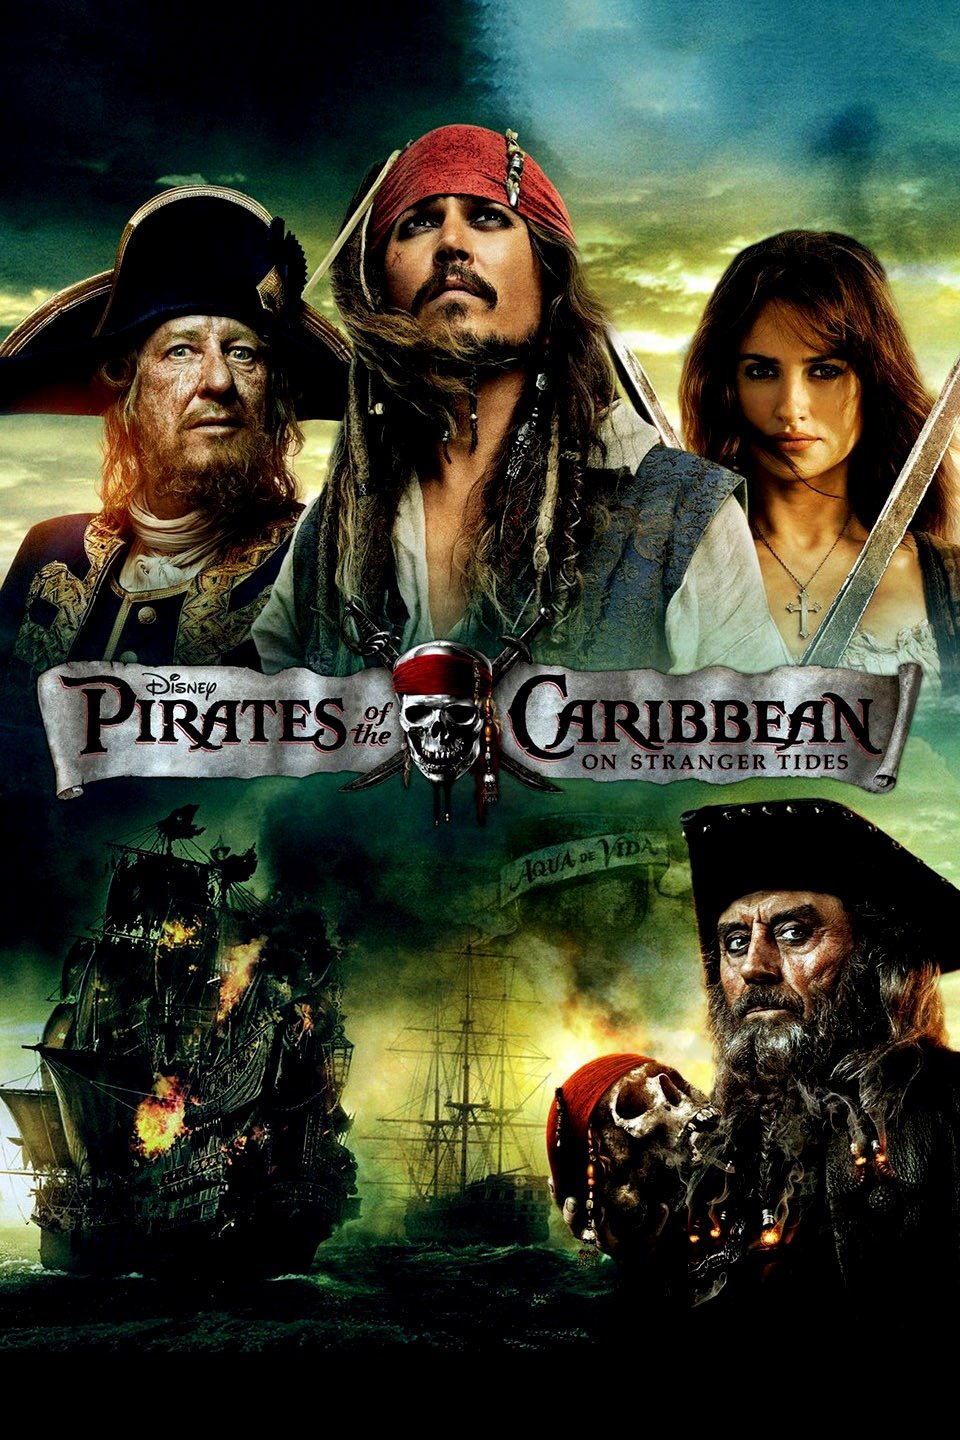 [MINI Super-HQ] Pirates of the Caribbean: On Stranger Tides (2011) ผจญภัยล่าสายน้ำอมฤตสุดขอบโลก ภาค 4 [1080P] [พากย์ไทย 5.1 + อังกฤษ 5.1] [บรรยายไทย + อังกฤษ] [เสียงไทย + ซับไทย] [ONE2UP]